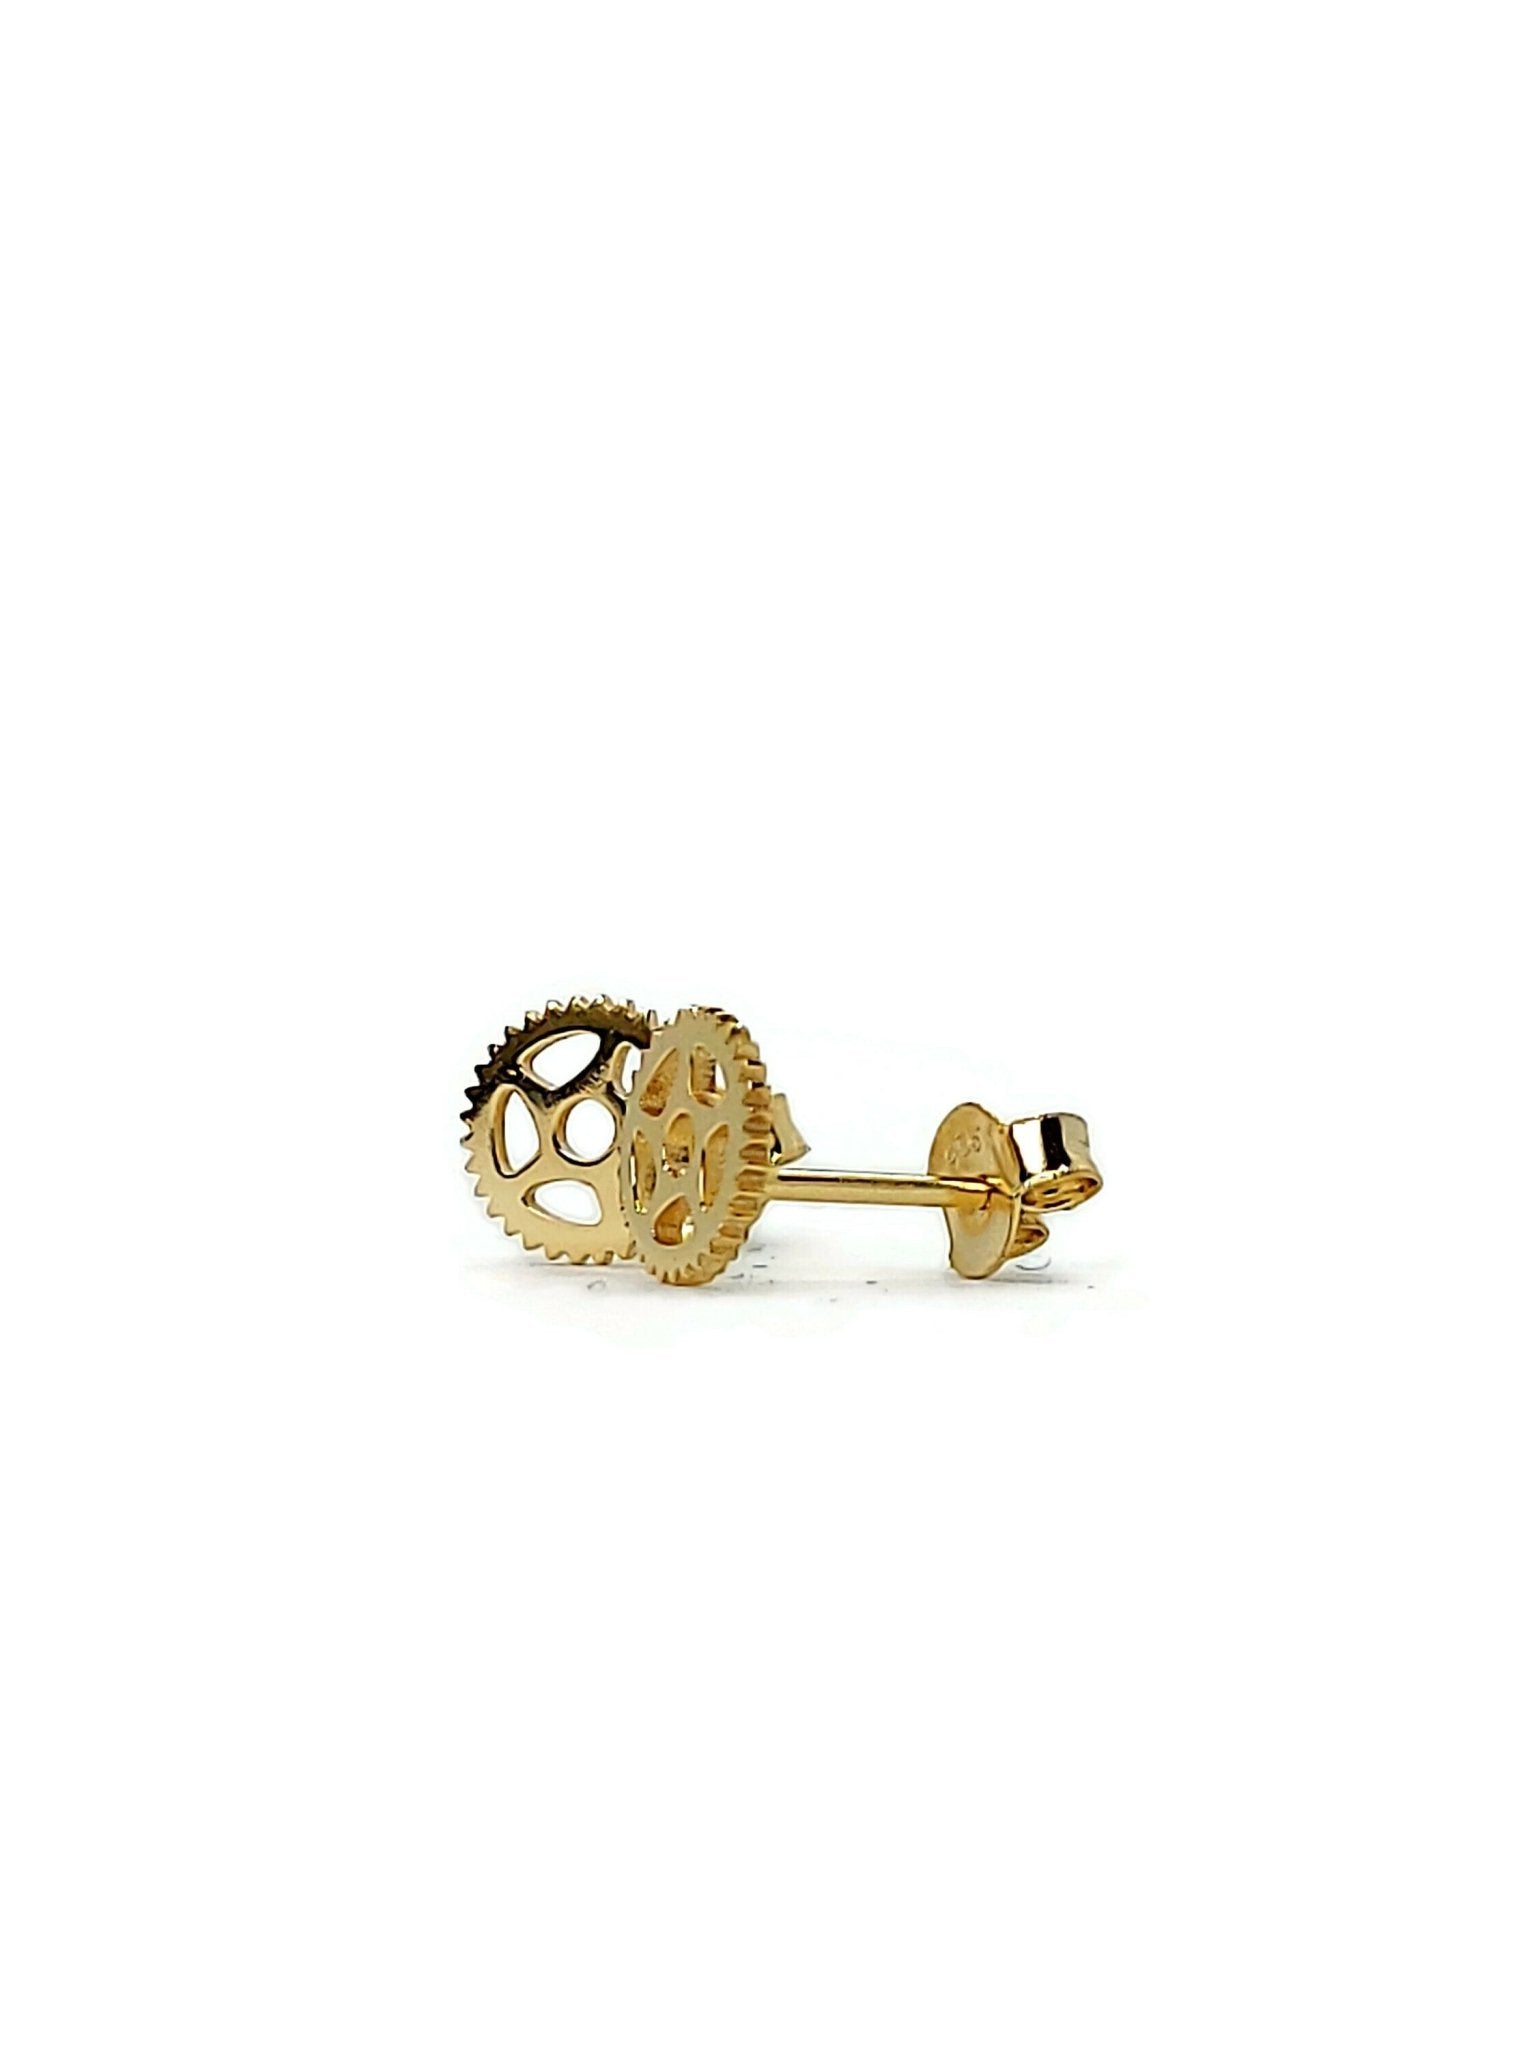 small bike gear post earrings in gold on white background_2